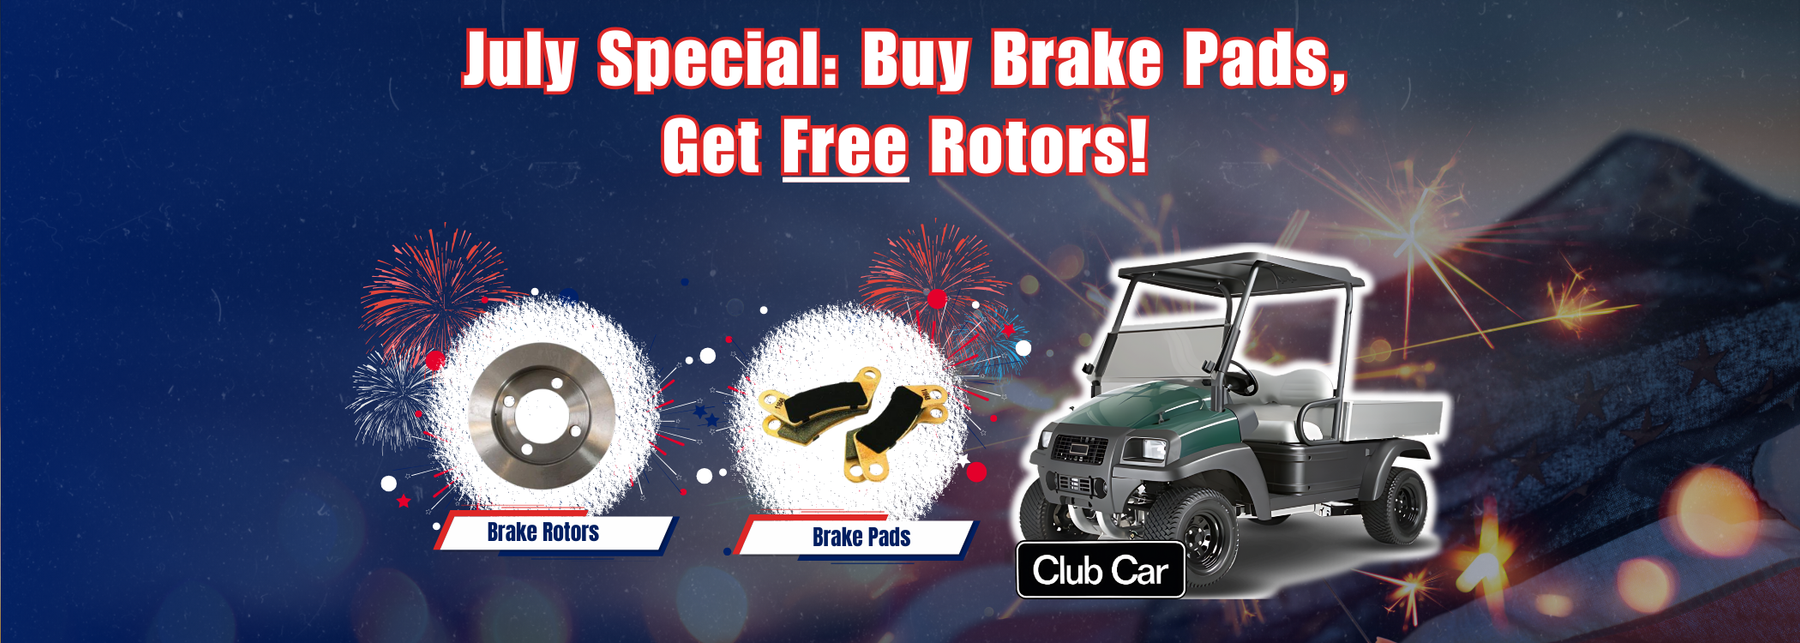 July Special: Buy Brake Pads, Get Free Rotors